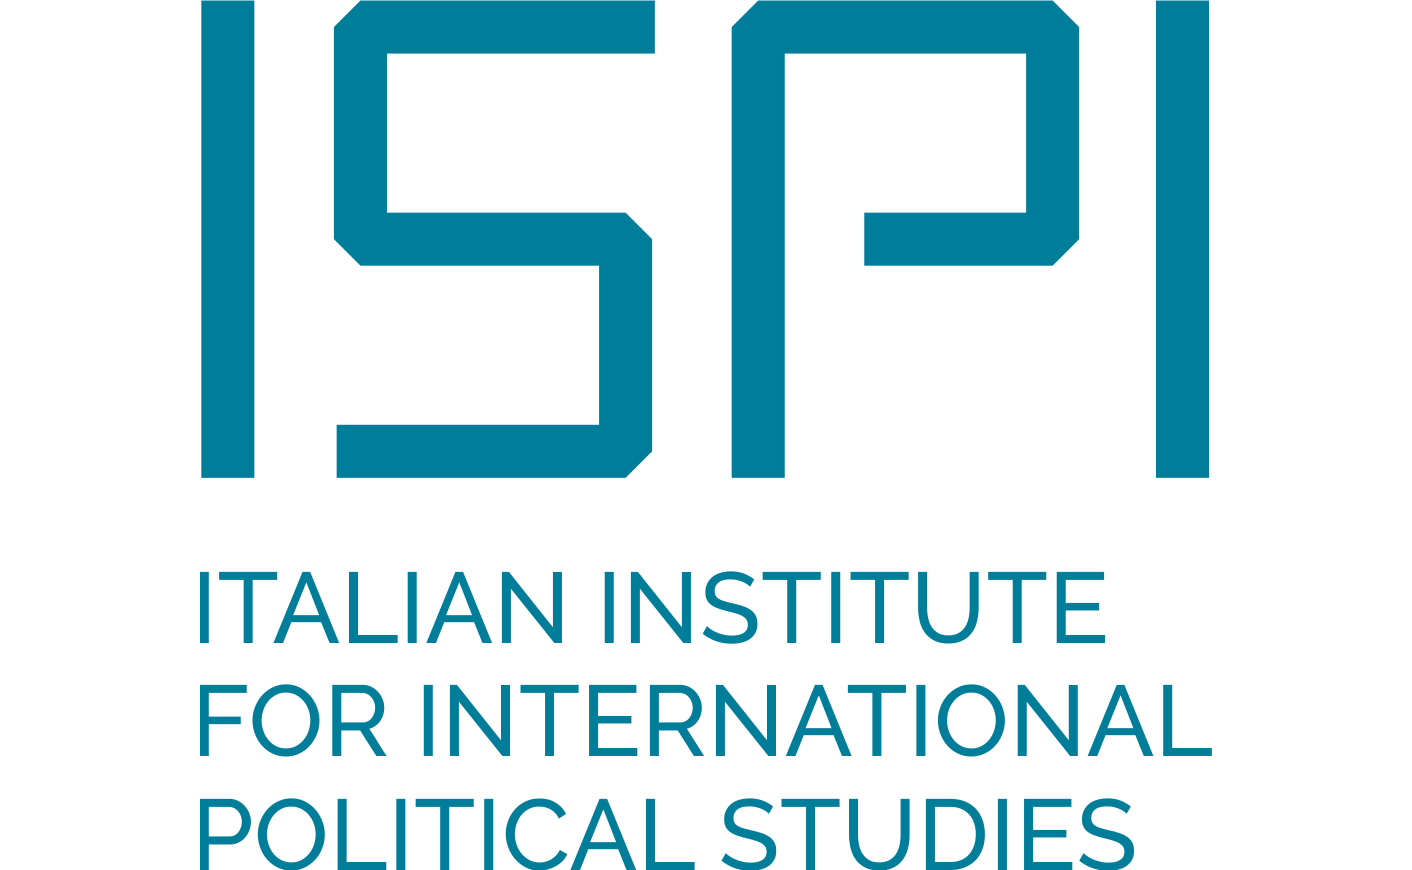 Italian Institute for International Political Studies (ISPI)